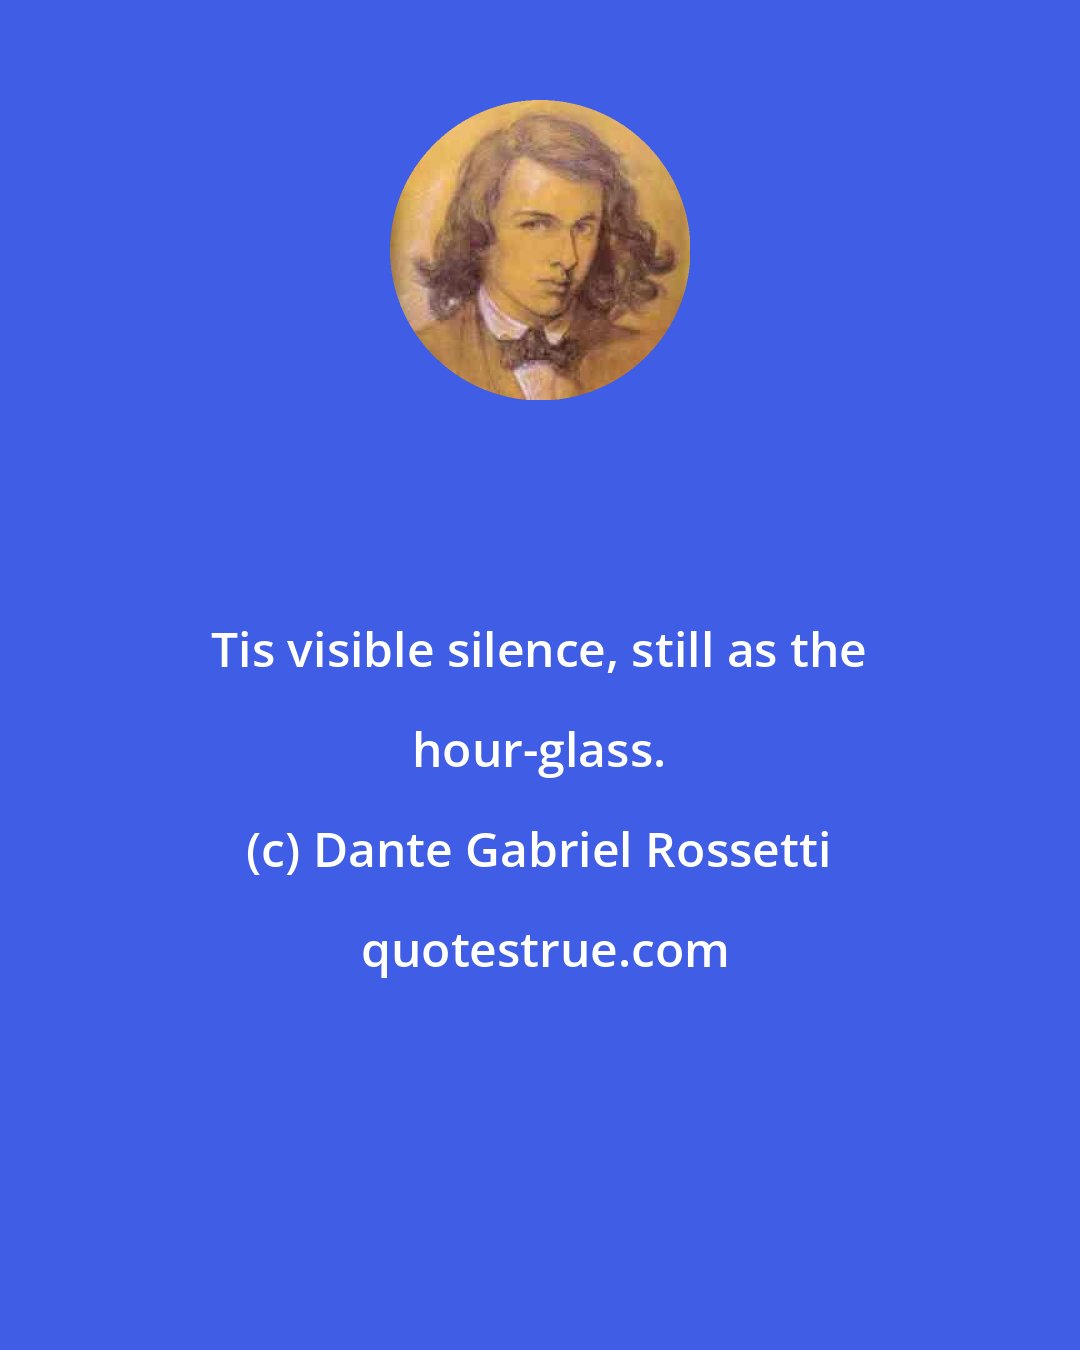 Dante Gabriel Rossetti: Tis visible silence, still as the hour-glass.